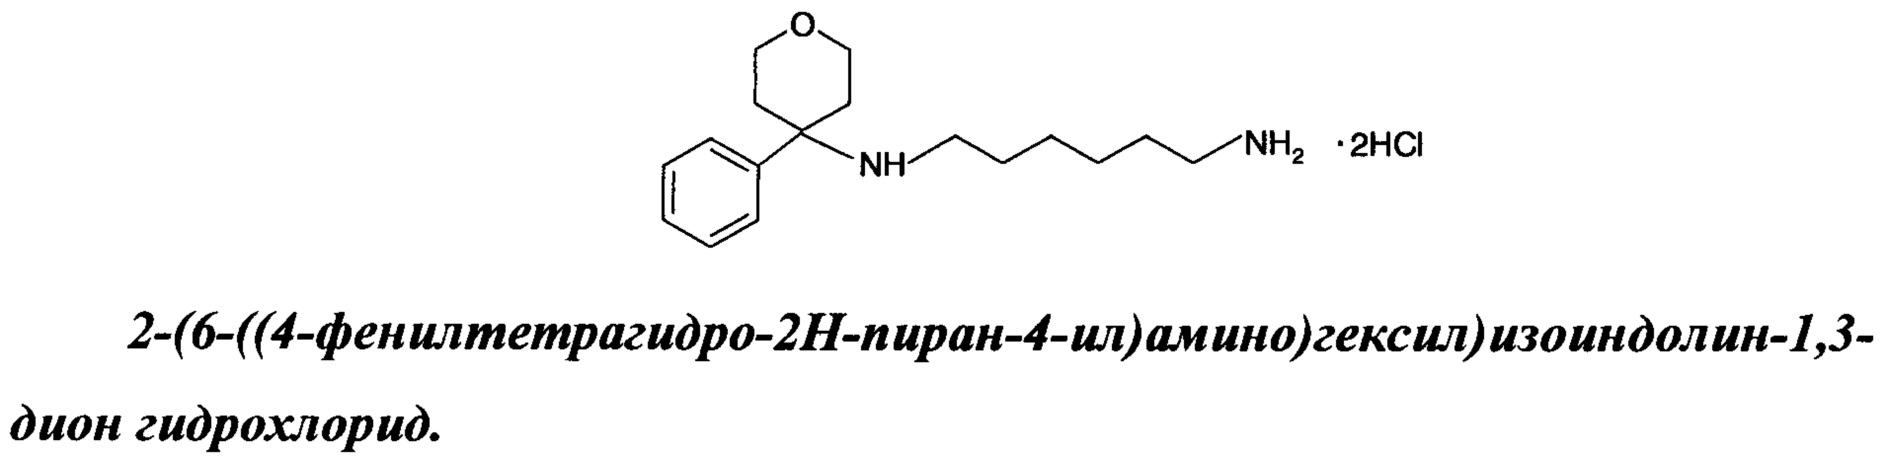 Пилокарпина гидрохлорид. Изоиндолин. Пилокарпина гидрохлорид порошок. Пилокарпина гидрохлорид формула.